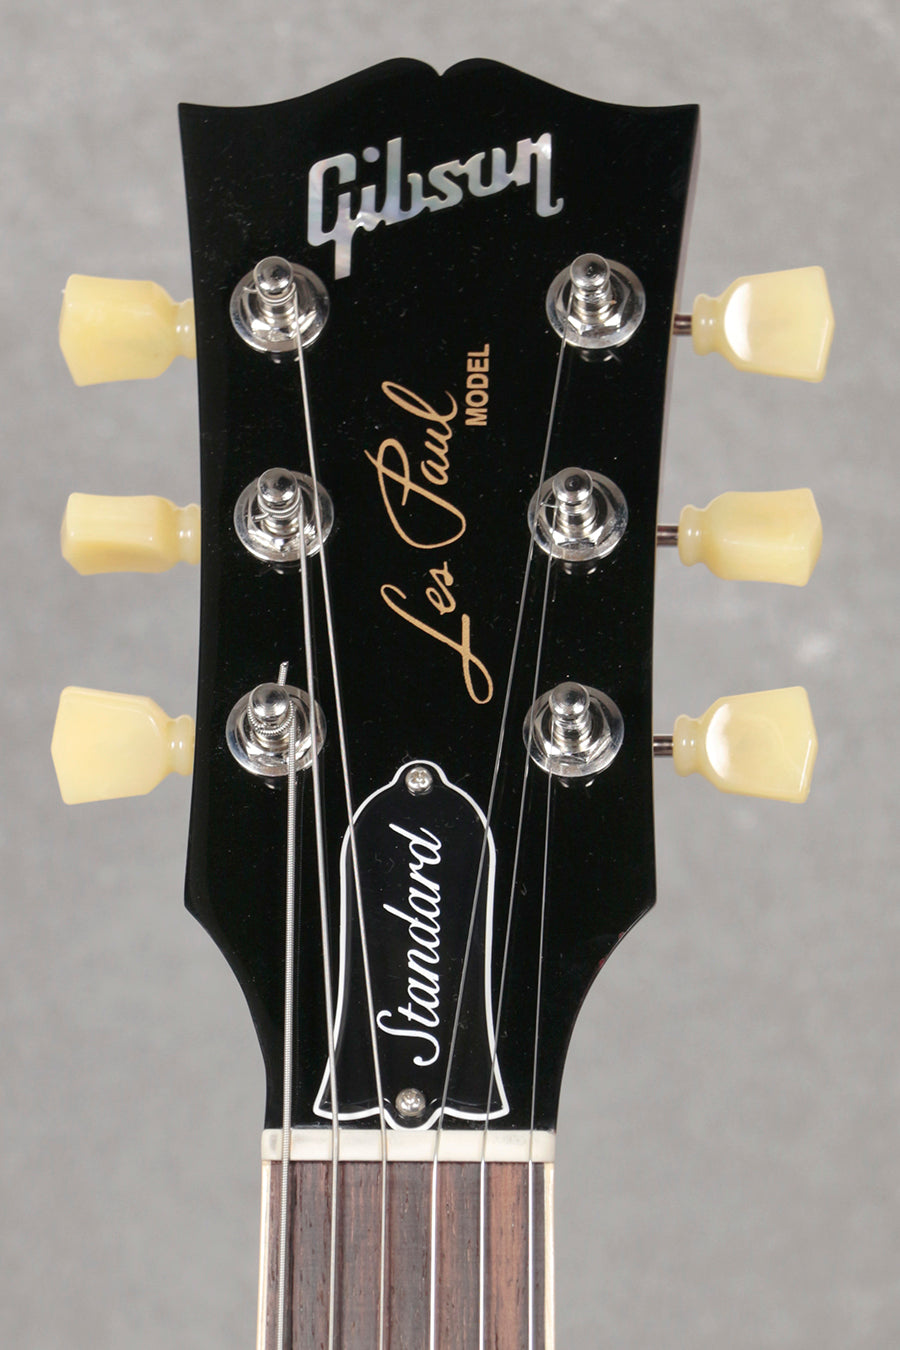 [SN 219520008] USED Gibson / Les Paul Standard 50s Heritage Cherry Sunburst [06]